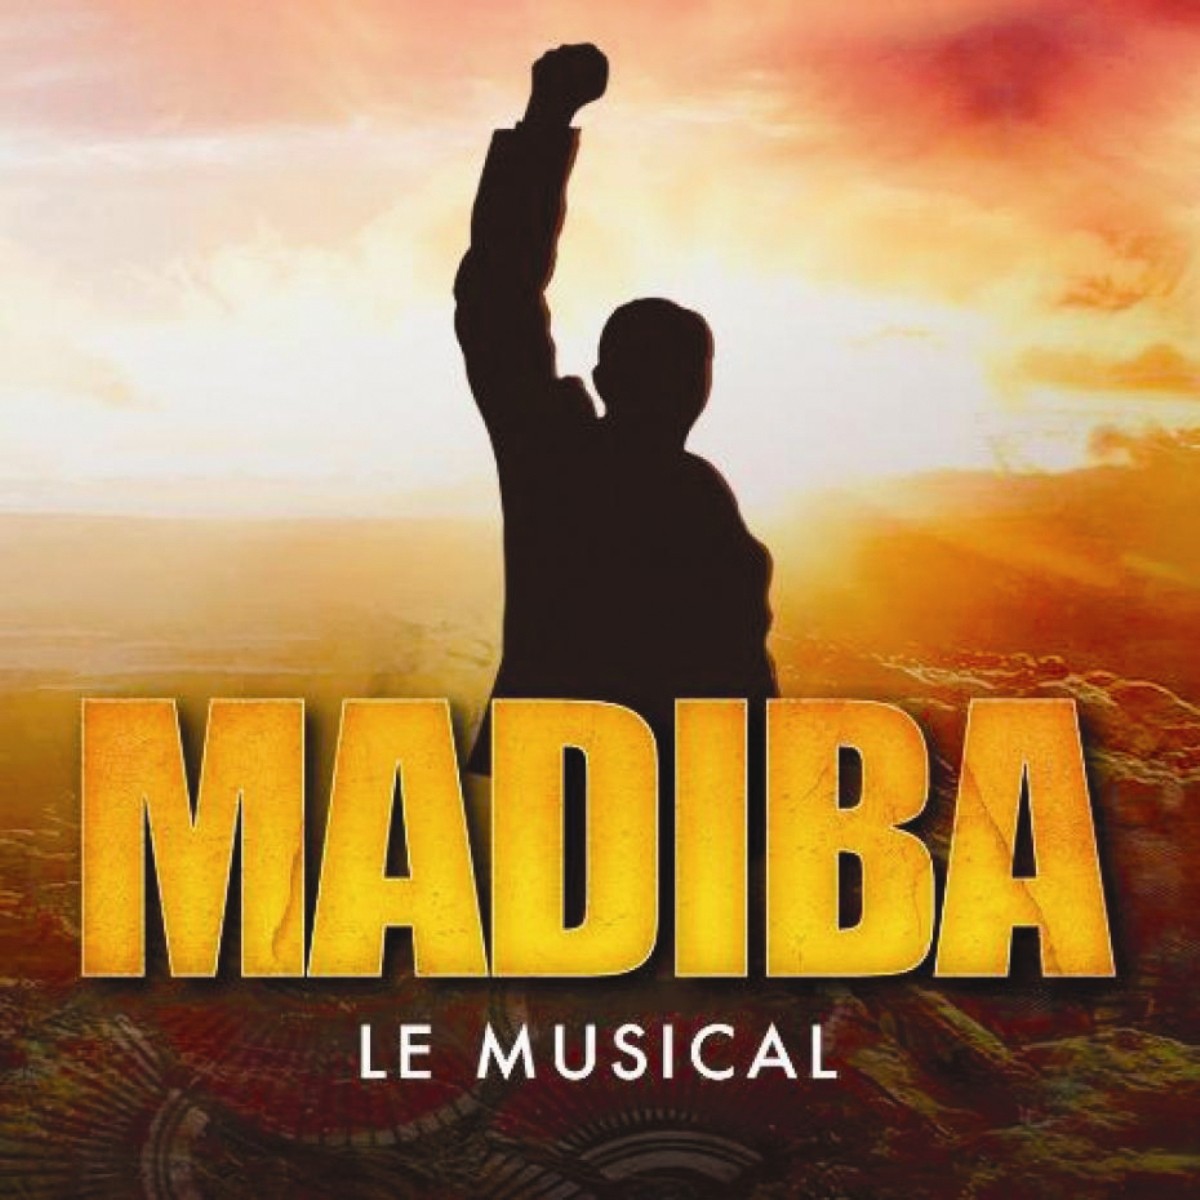 Madiba - Le musical